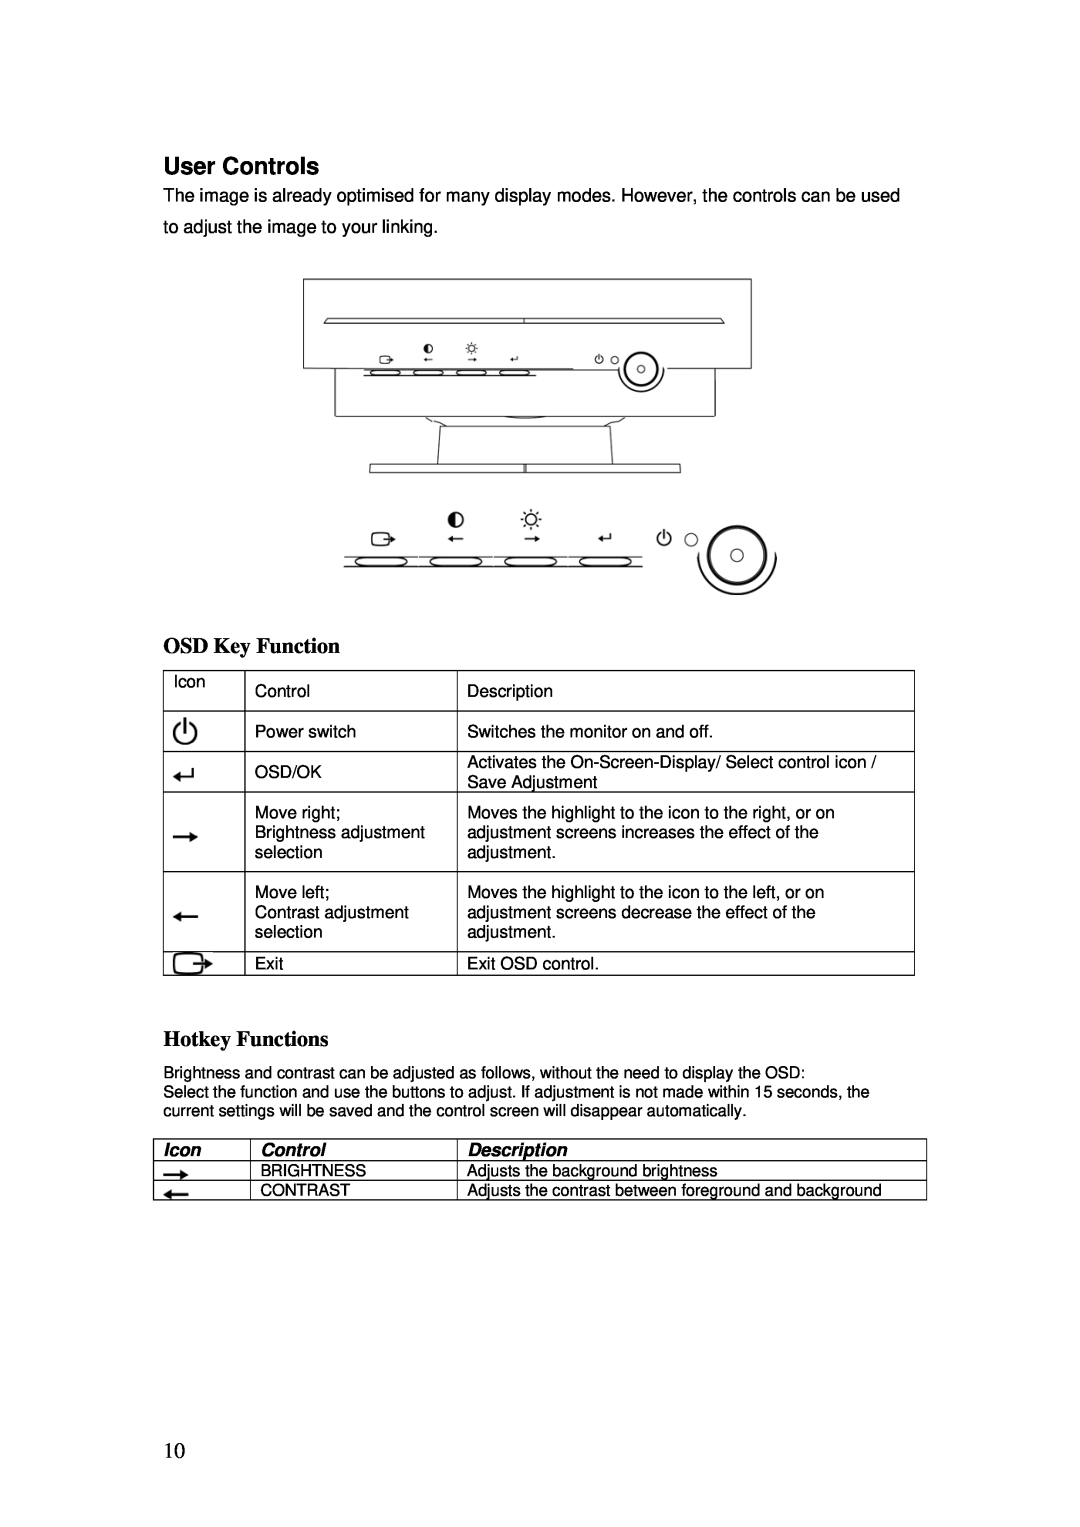 Lenovo C190 manual User Controls, OSD Key Function, Hotkey Functions, Icon, Description 